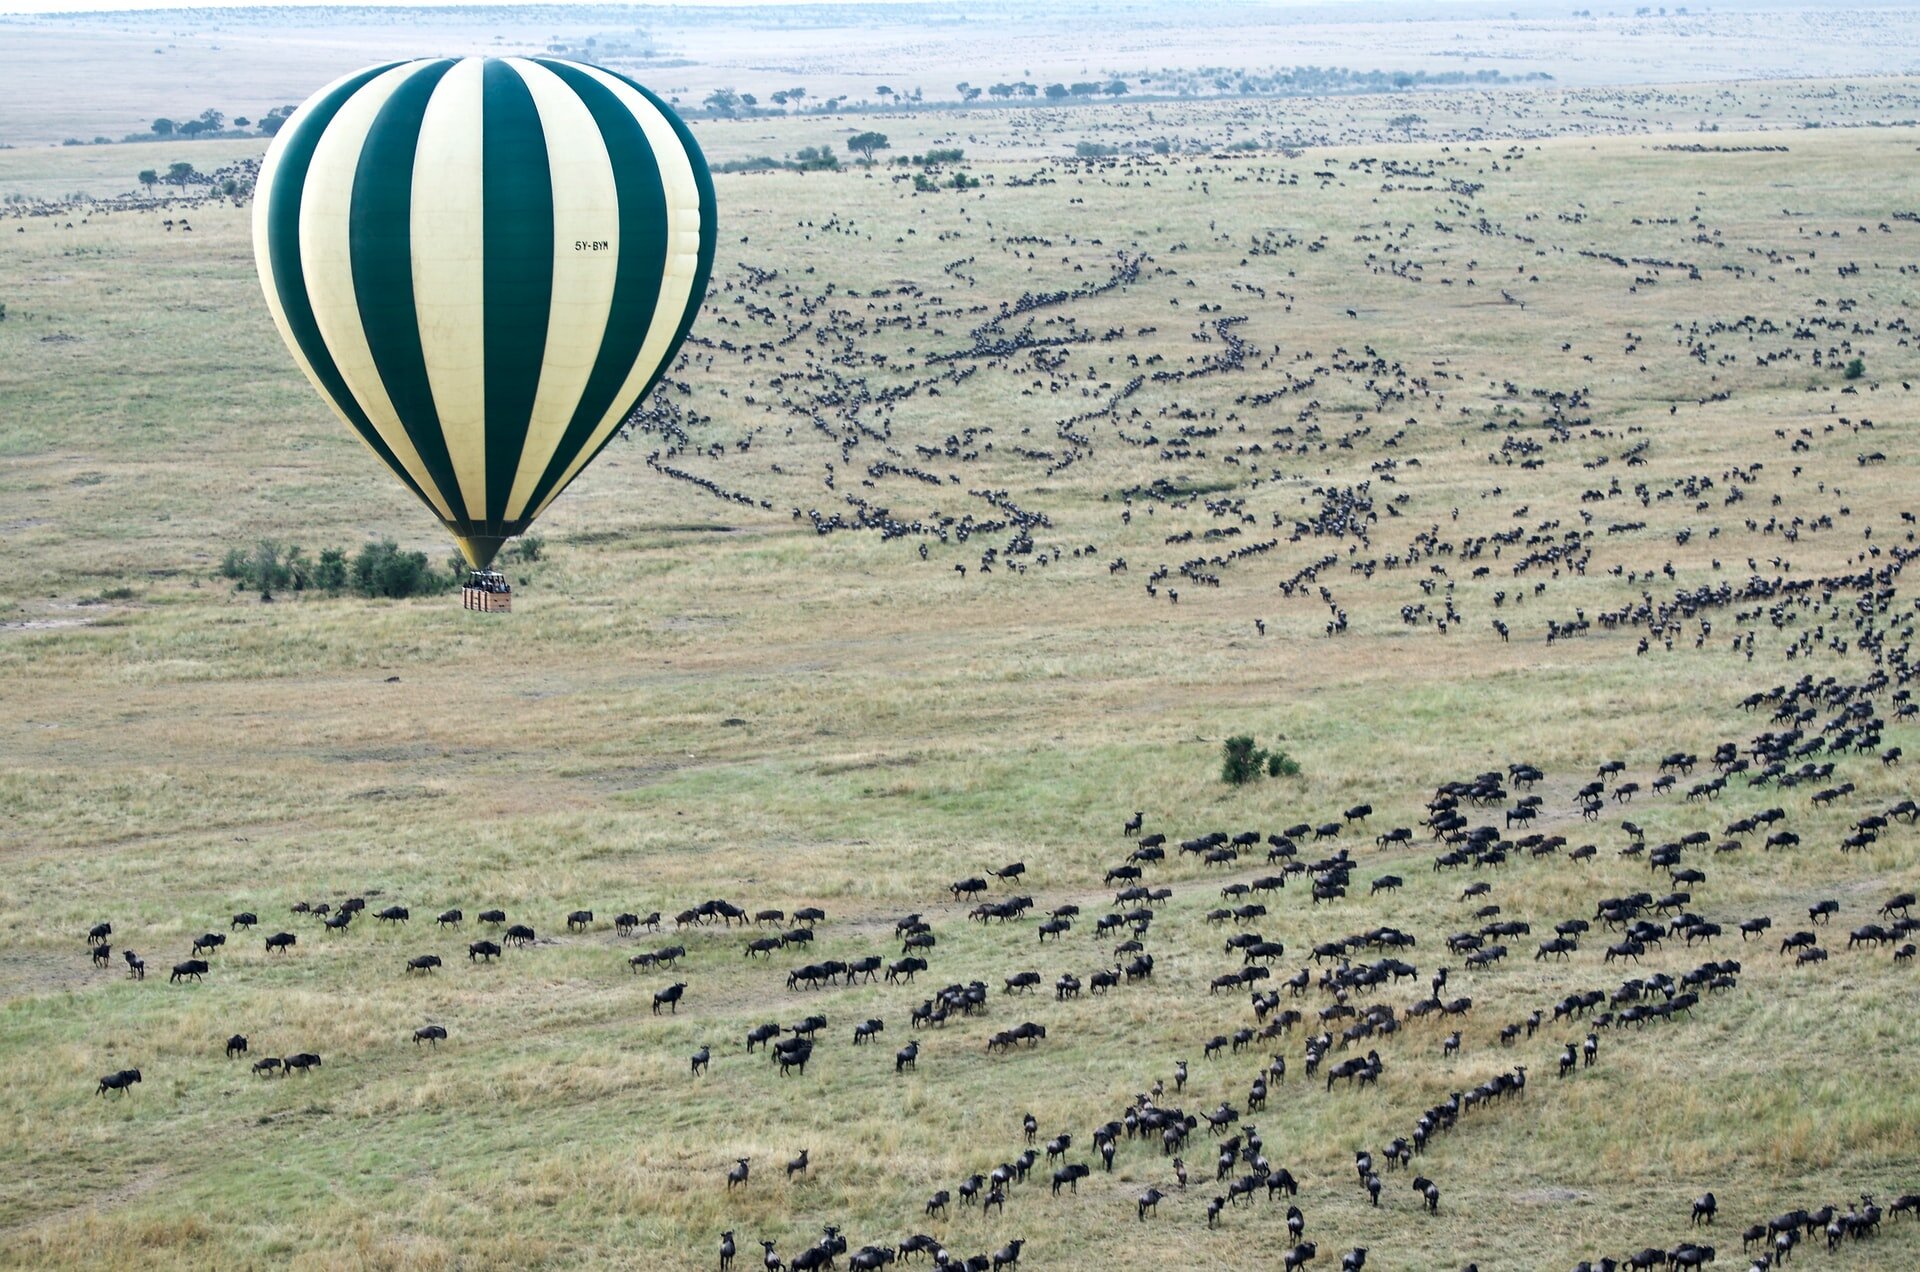 Grande-Migração-serengeti-tanzania.jpg